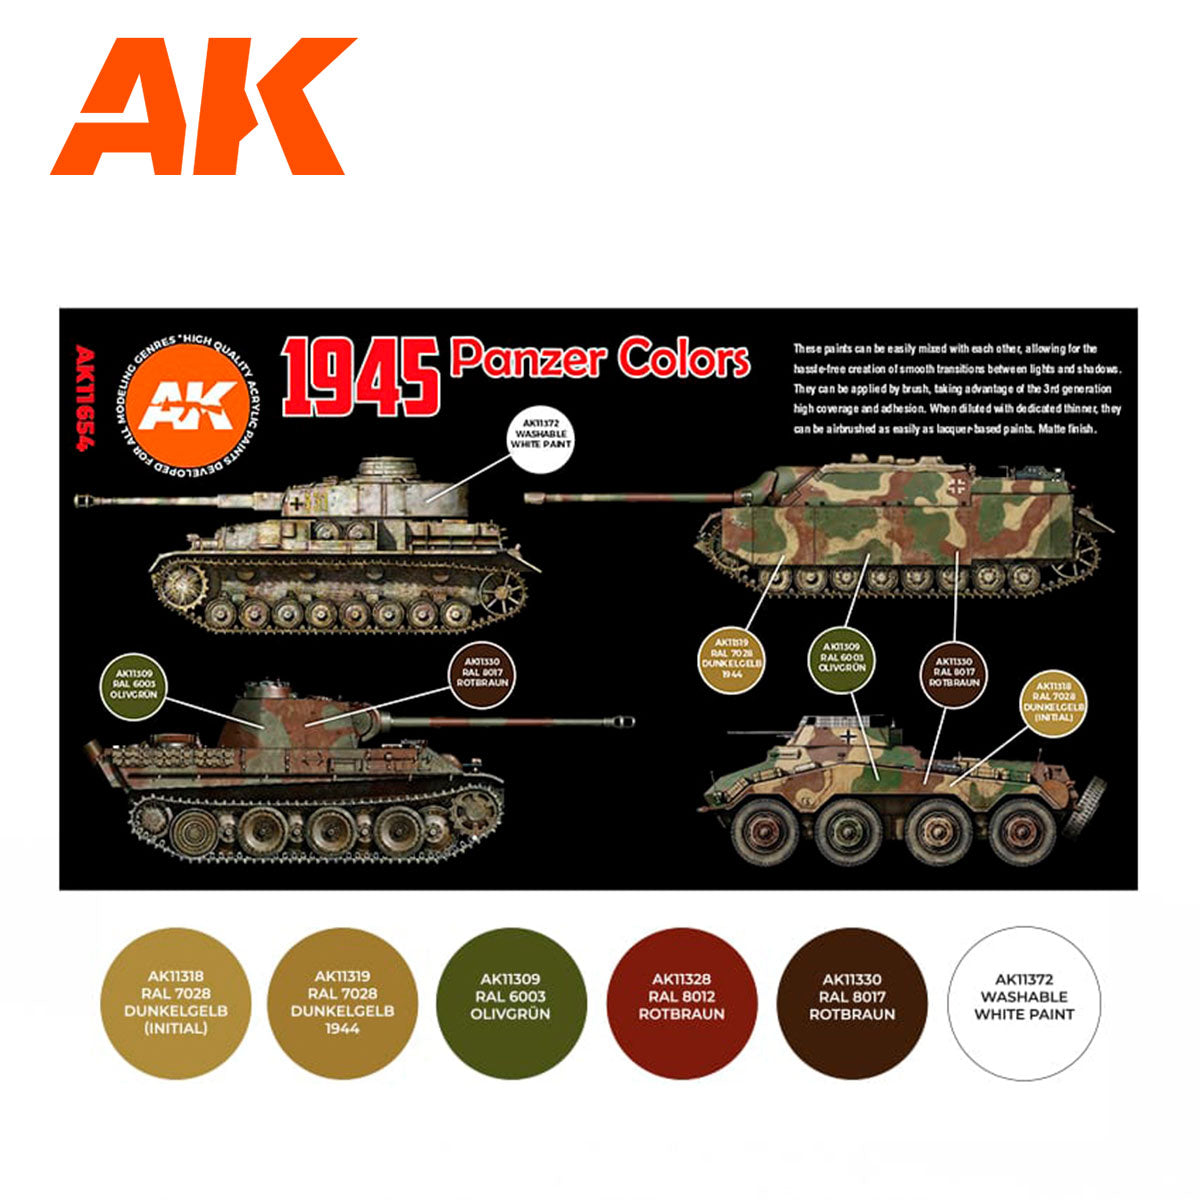 1945 Panzer Colors. AK 3rd Gen (Special Order)